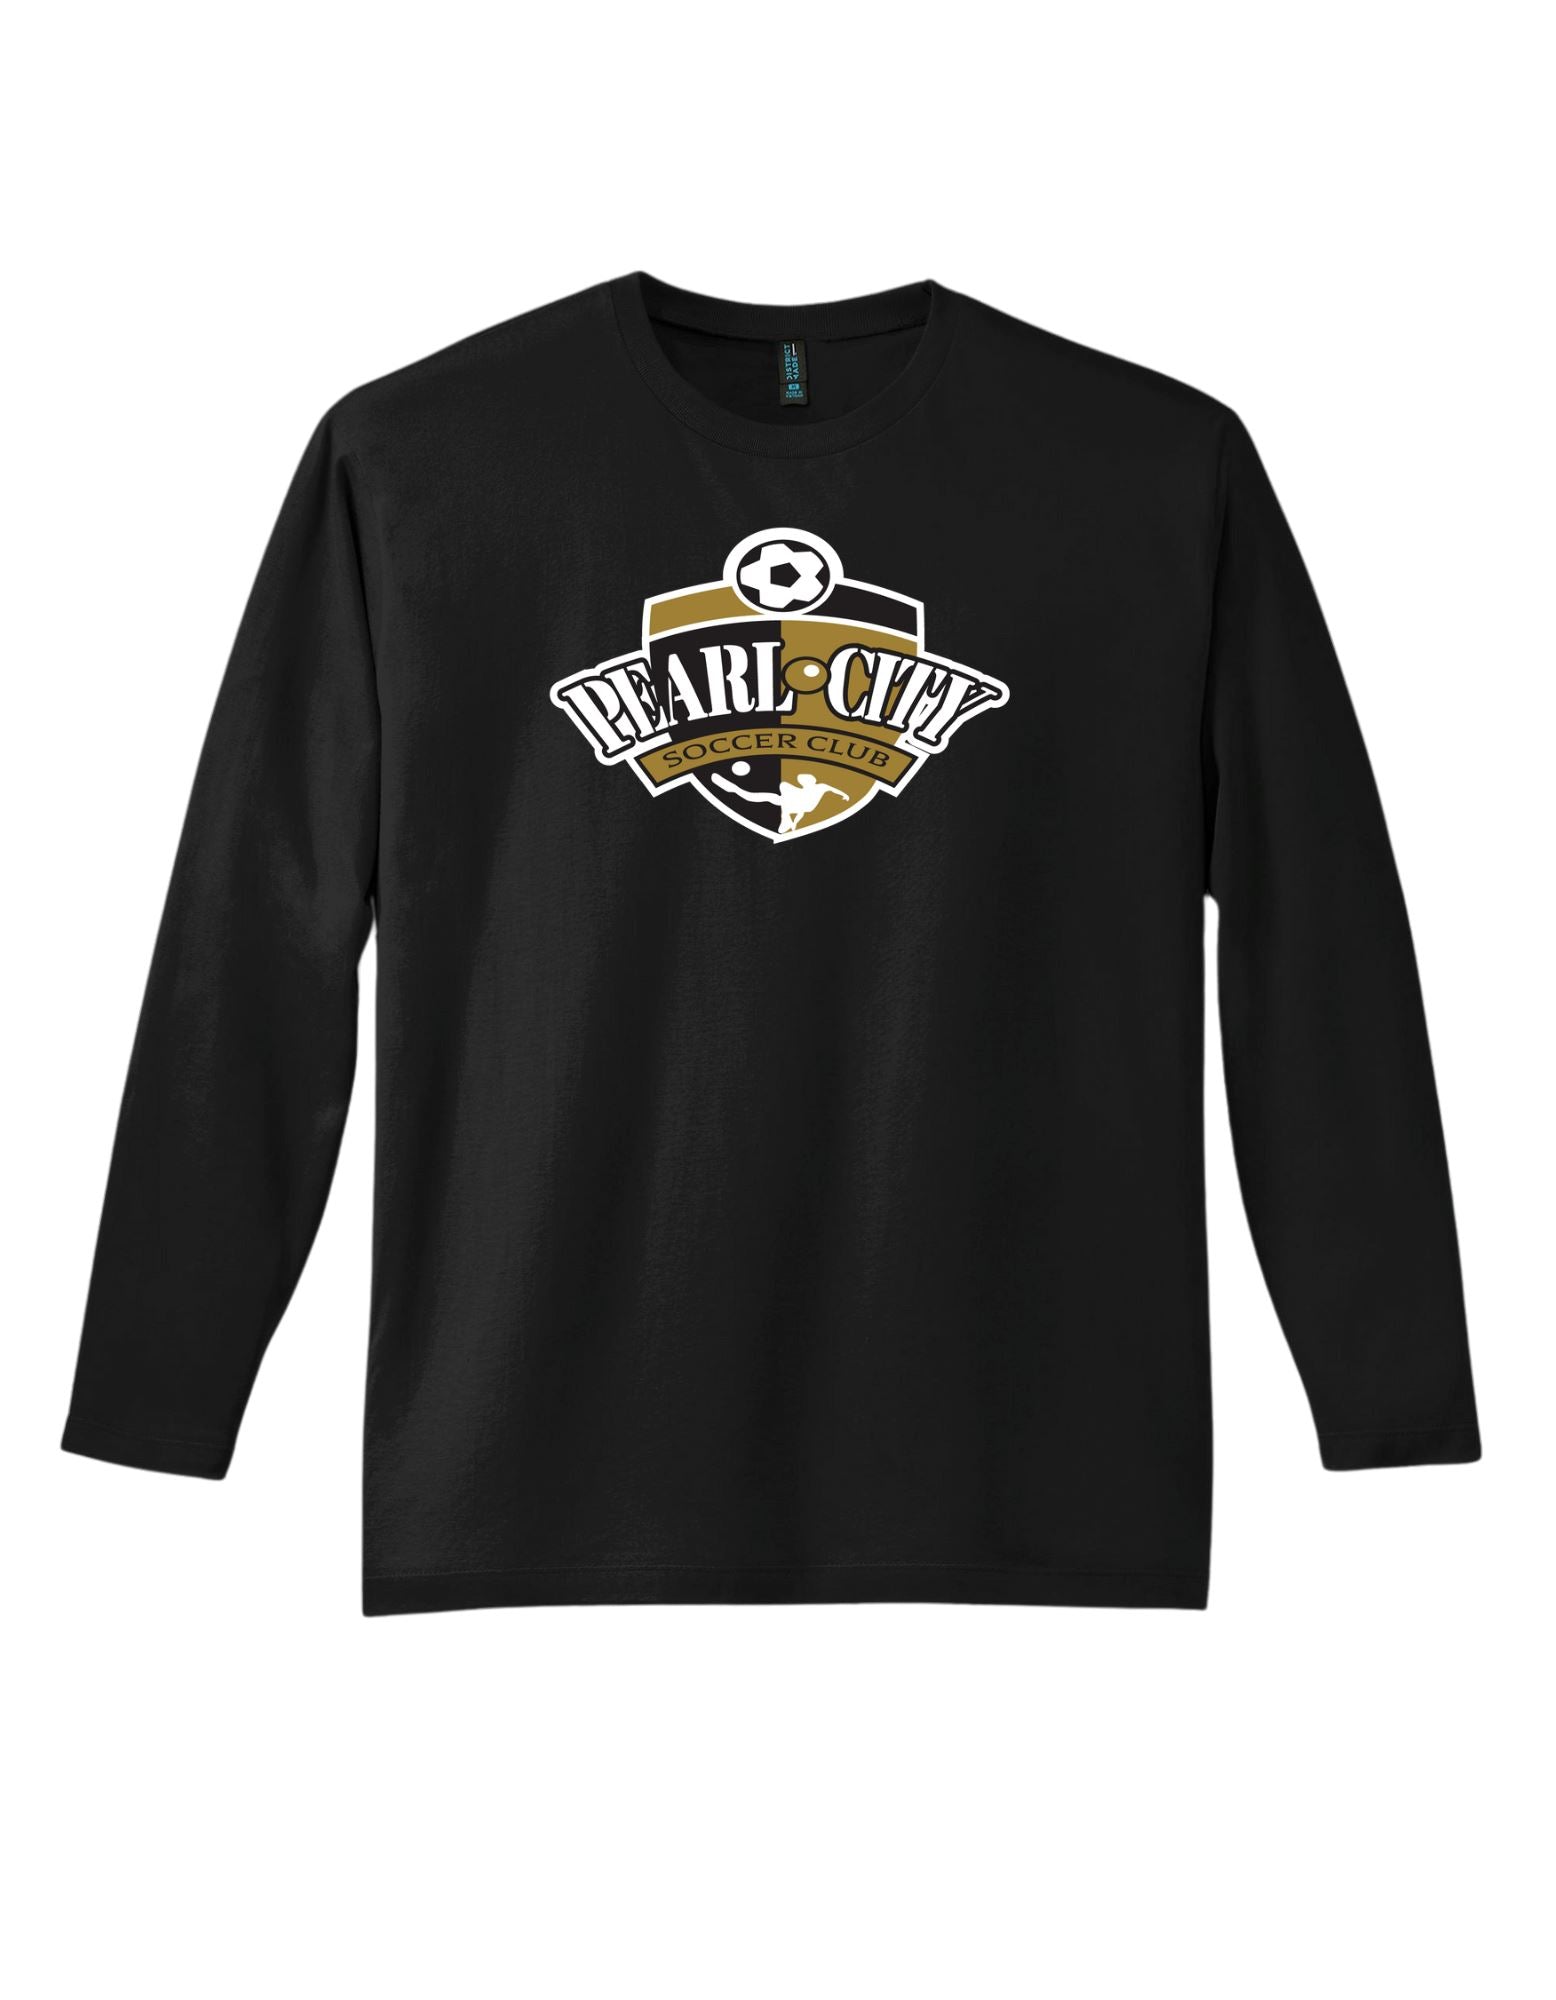 Pearl City Soccer Club Men's Long Sleeve Tee Long Sleeve Goal Kick Soccer Adult X-Small Jet Black 